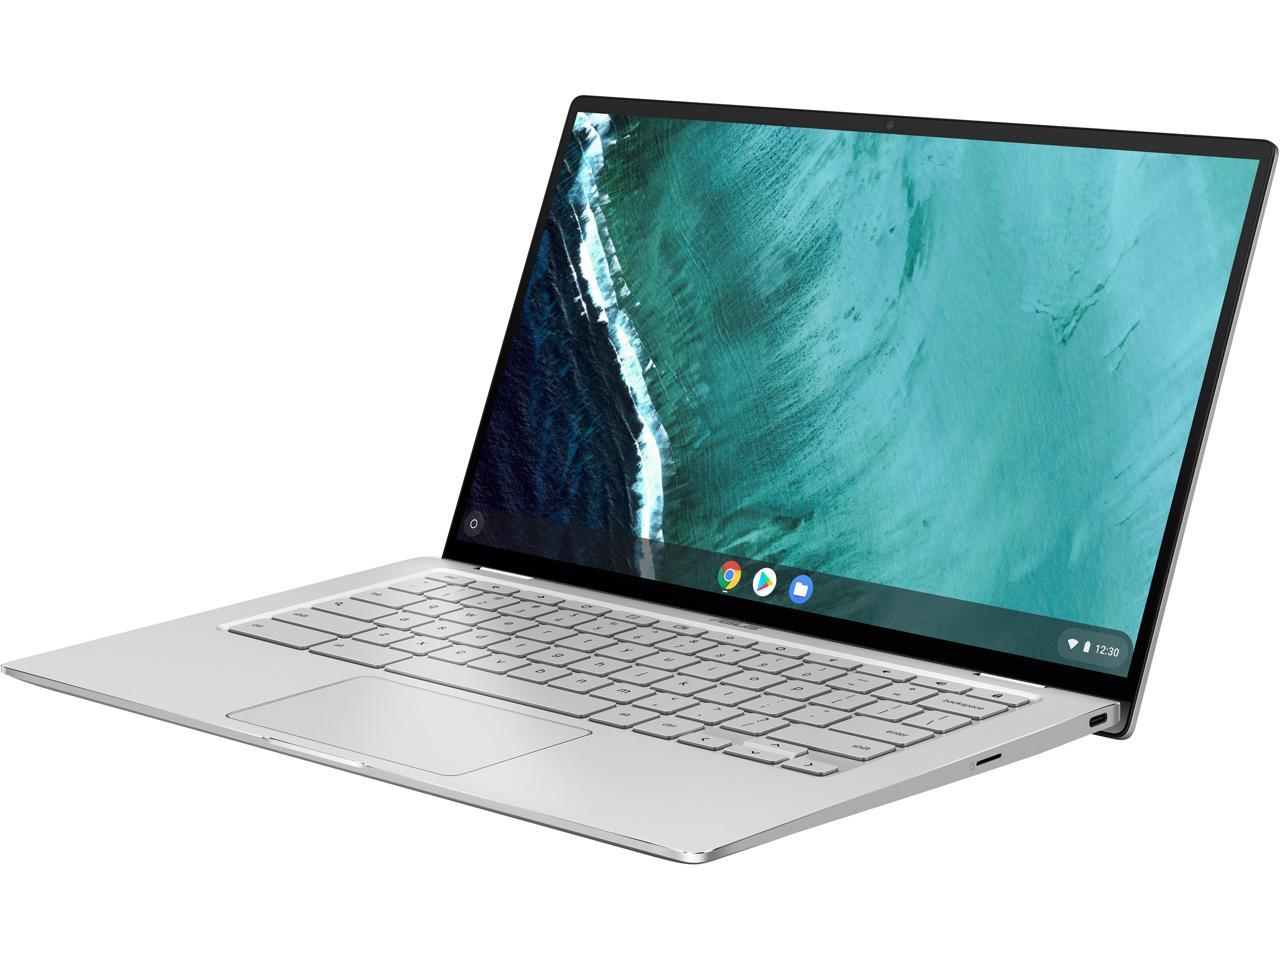 Asus Chromebook C434 - چطوری با توجه به نیازم بهترین لپ تاپ را بخرم؟